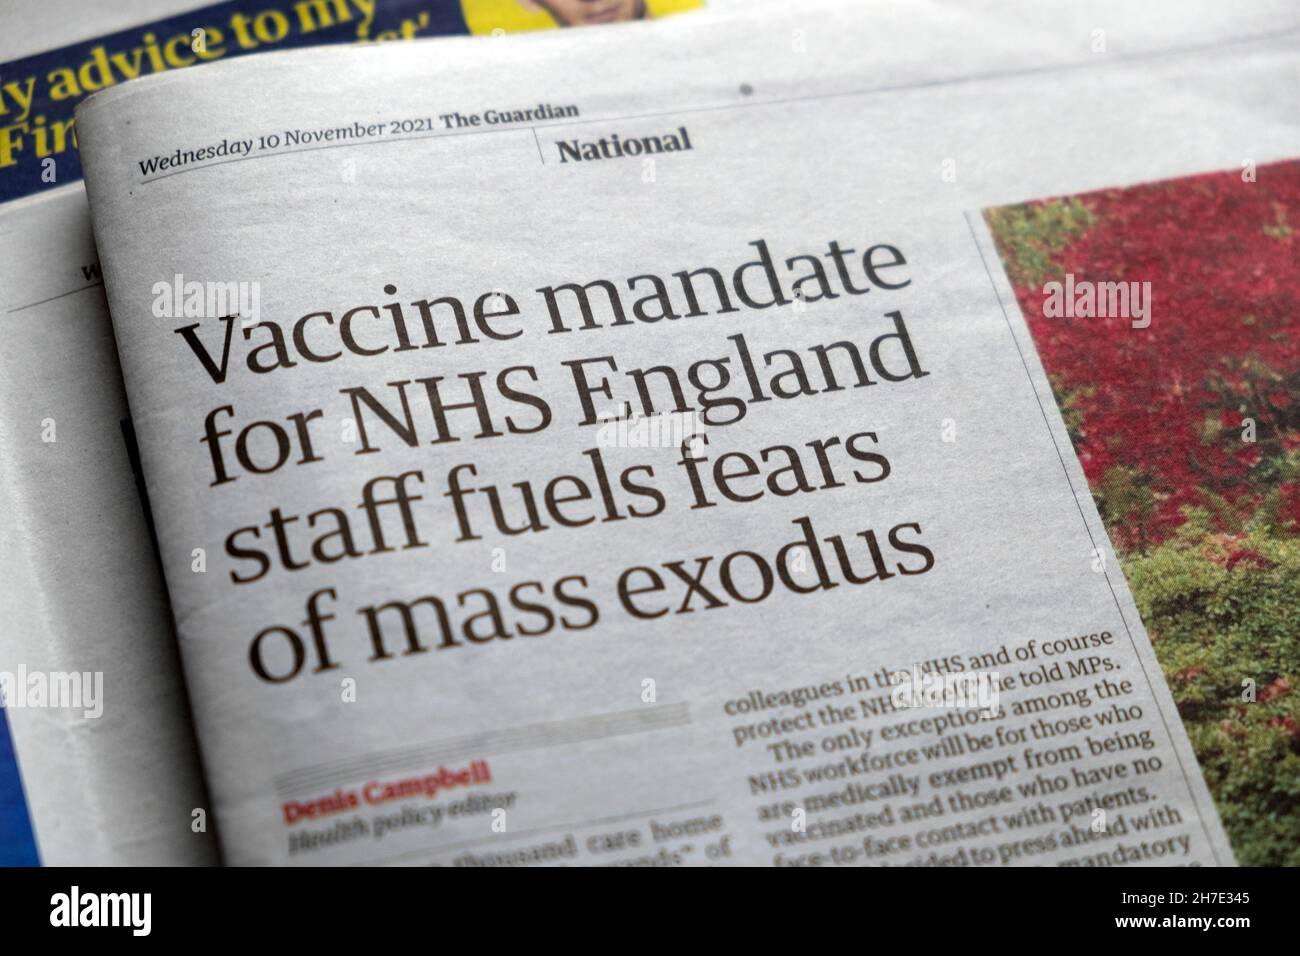 'Vaccine mandate for NHS England staff fuels fears of mass exodus' Guardian newspaper headline covid 19 article 10 November 2021 London UK Stock Photo